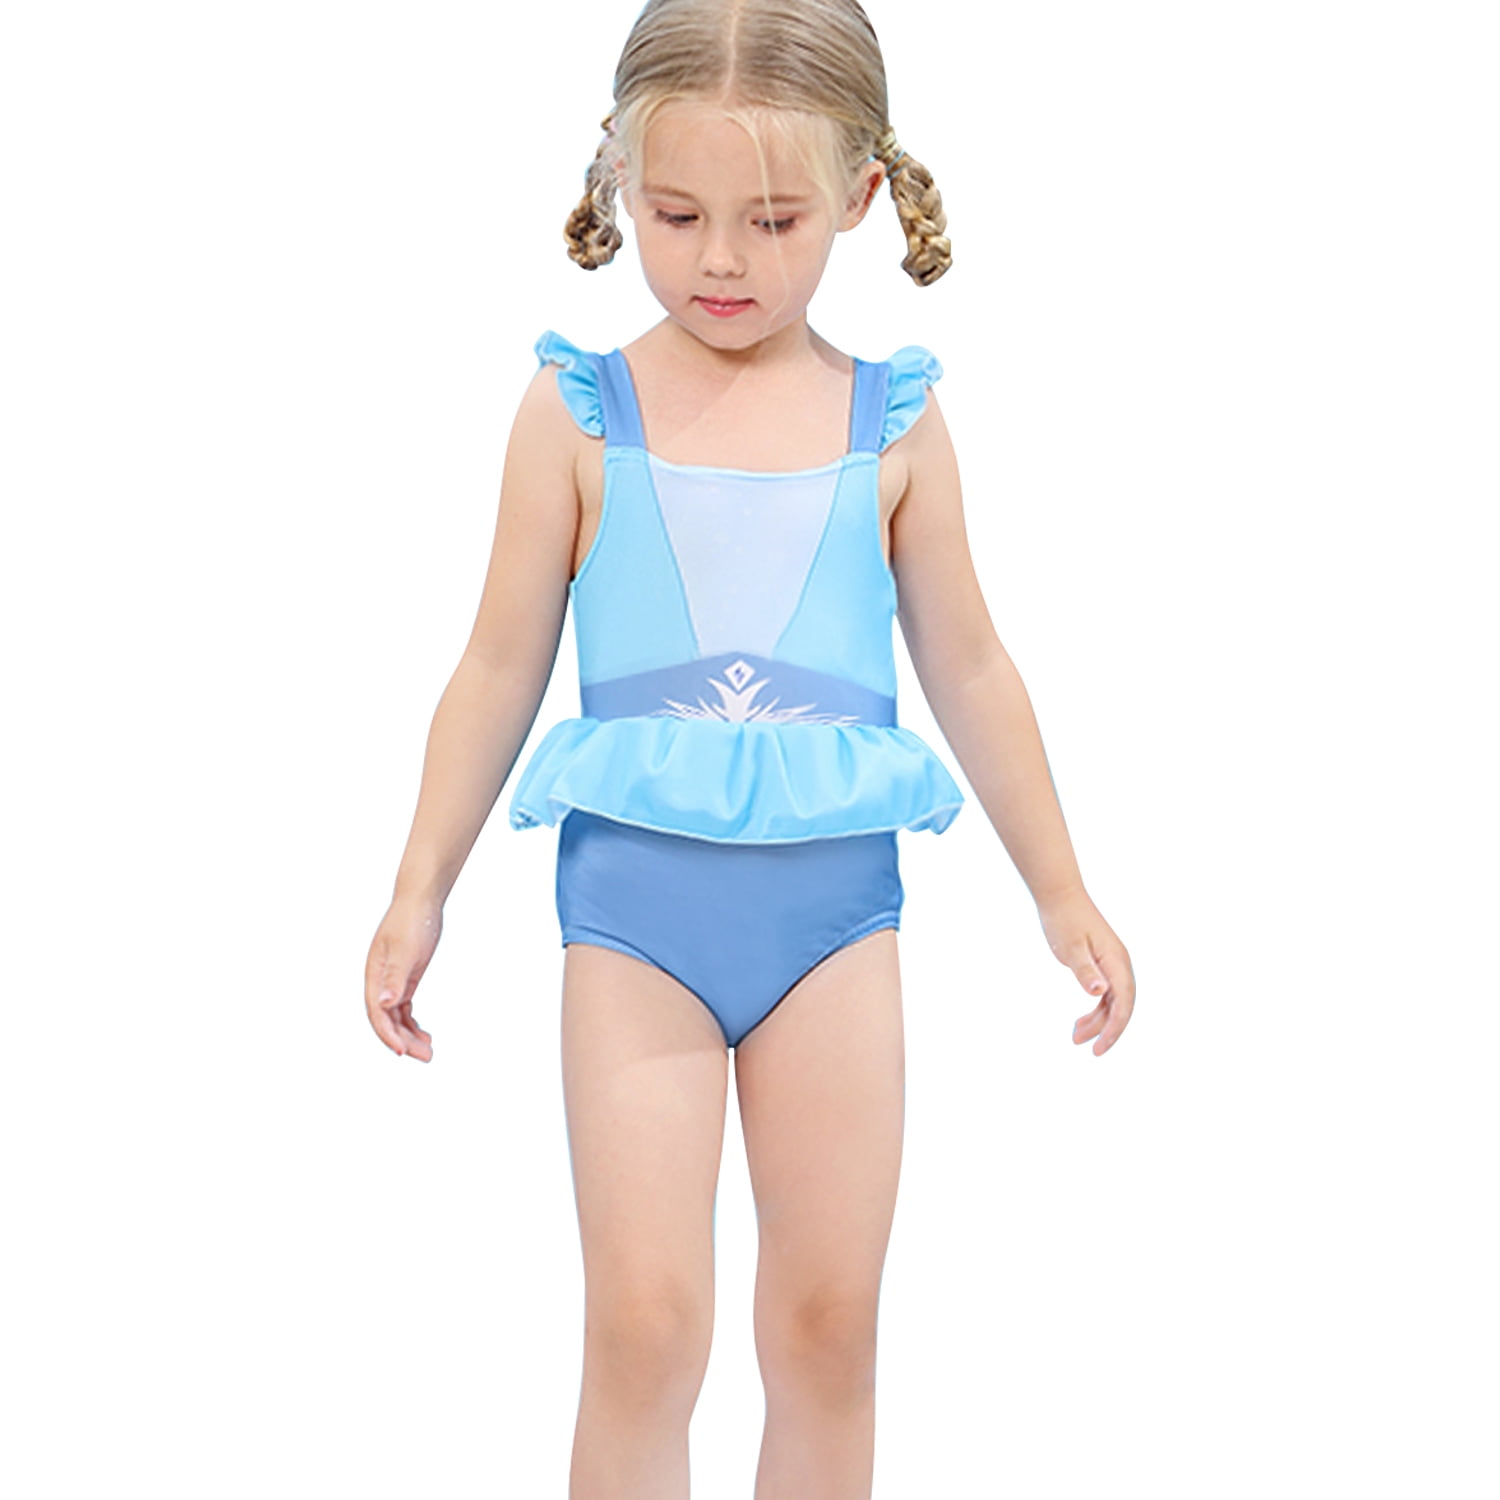 Frozen Anna Elsa Swim Suit Costume Blue Disney Girls Kids 2 3 4 5 6 7 years 